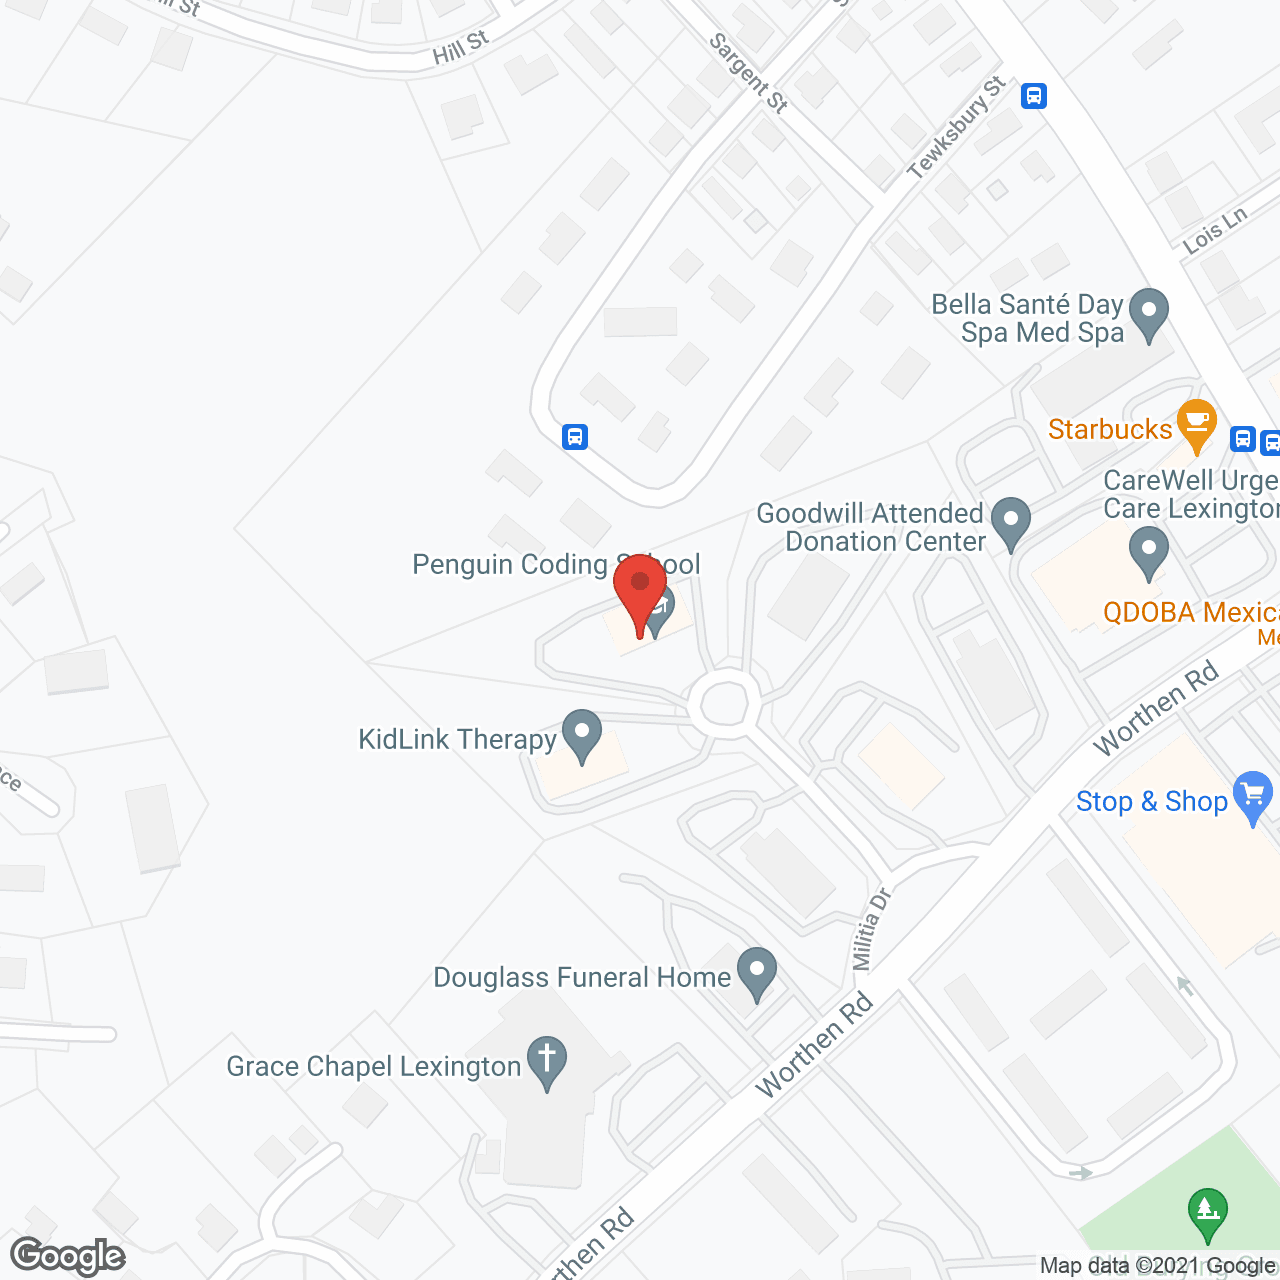 Home Instead - Lexington, MA in google map